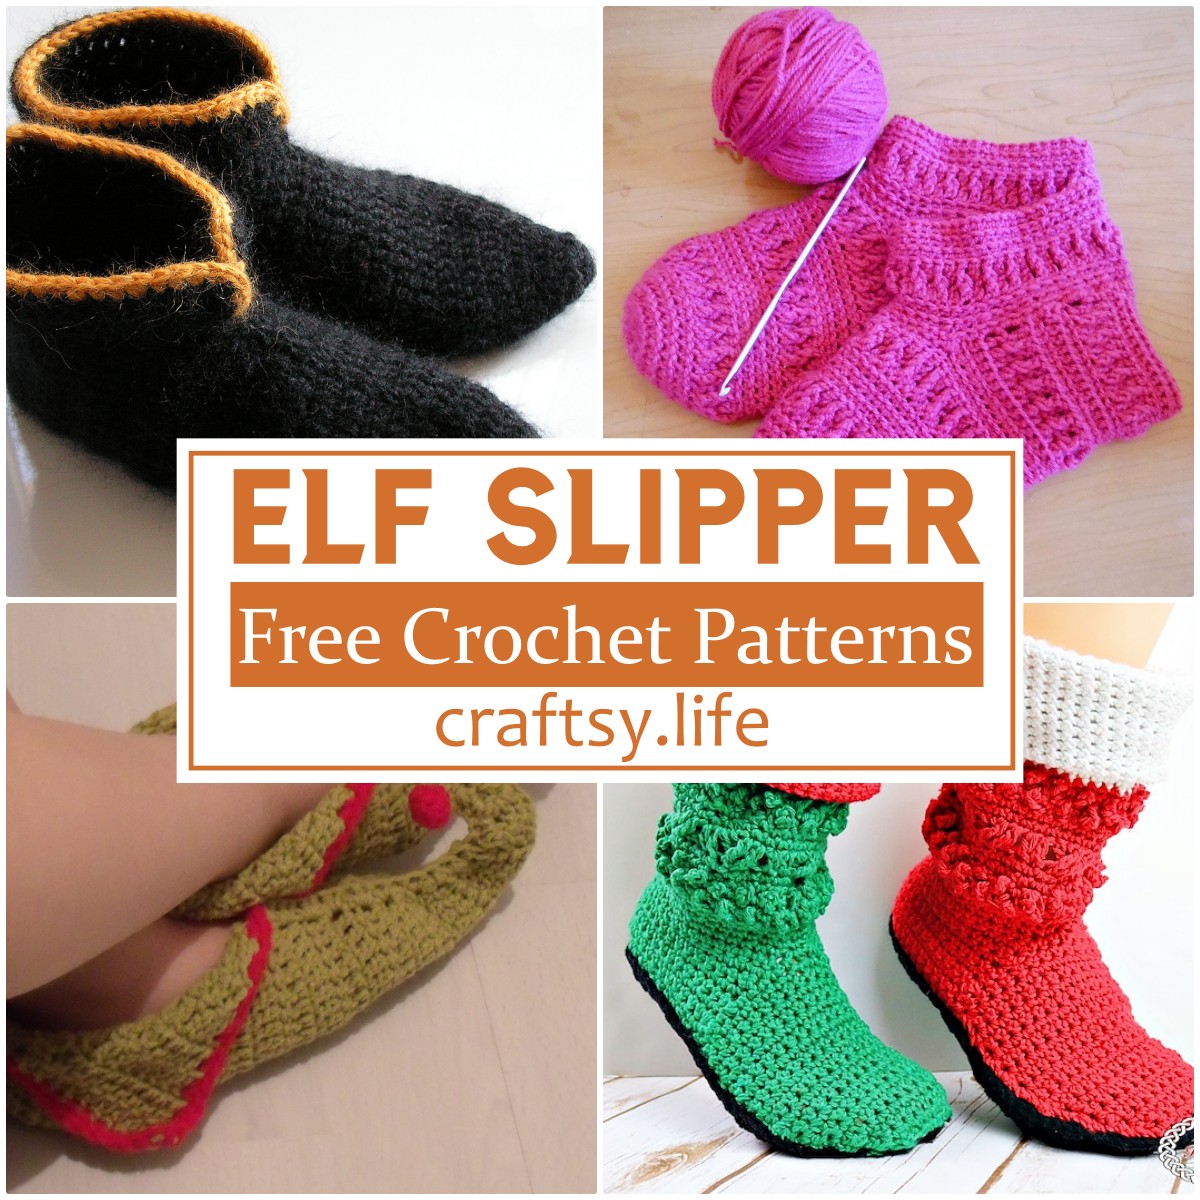 6 Crochet Elf Slipper Patterns For Christmas - Craftsy